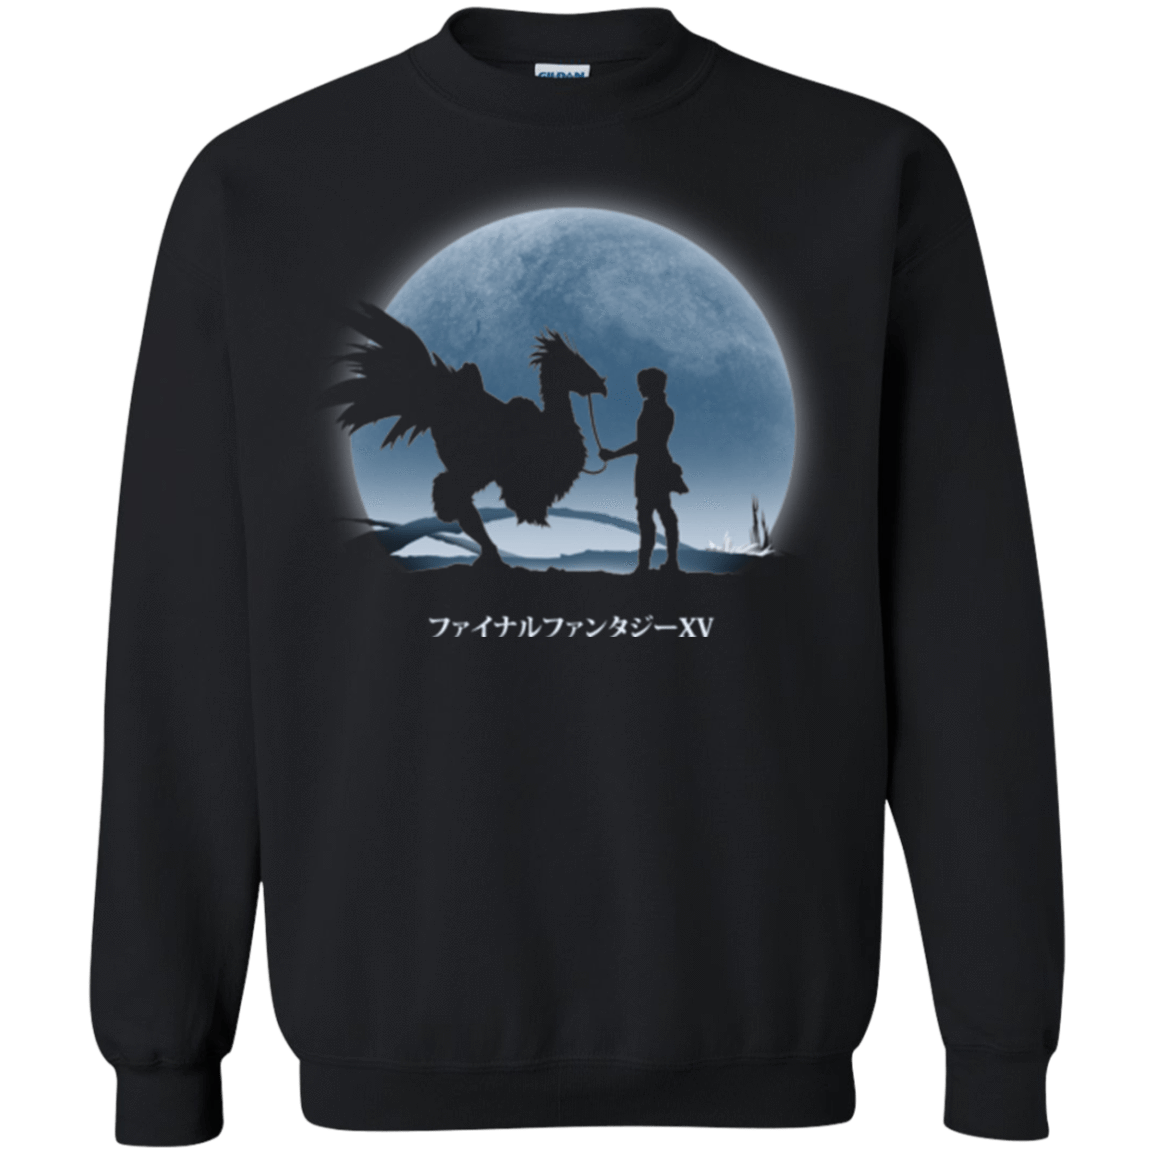 Sweatshirts Black / Small Duscae at Night Crewneck Sweatshirt